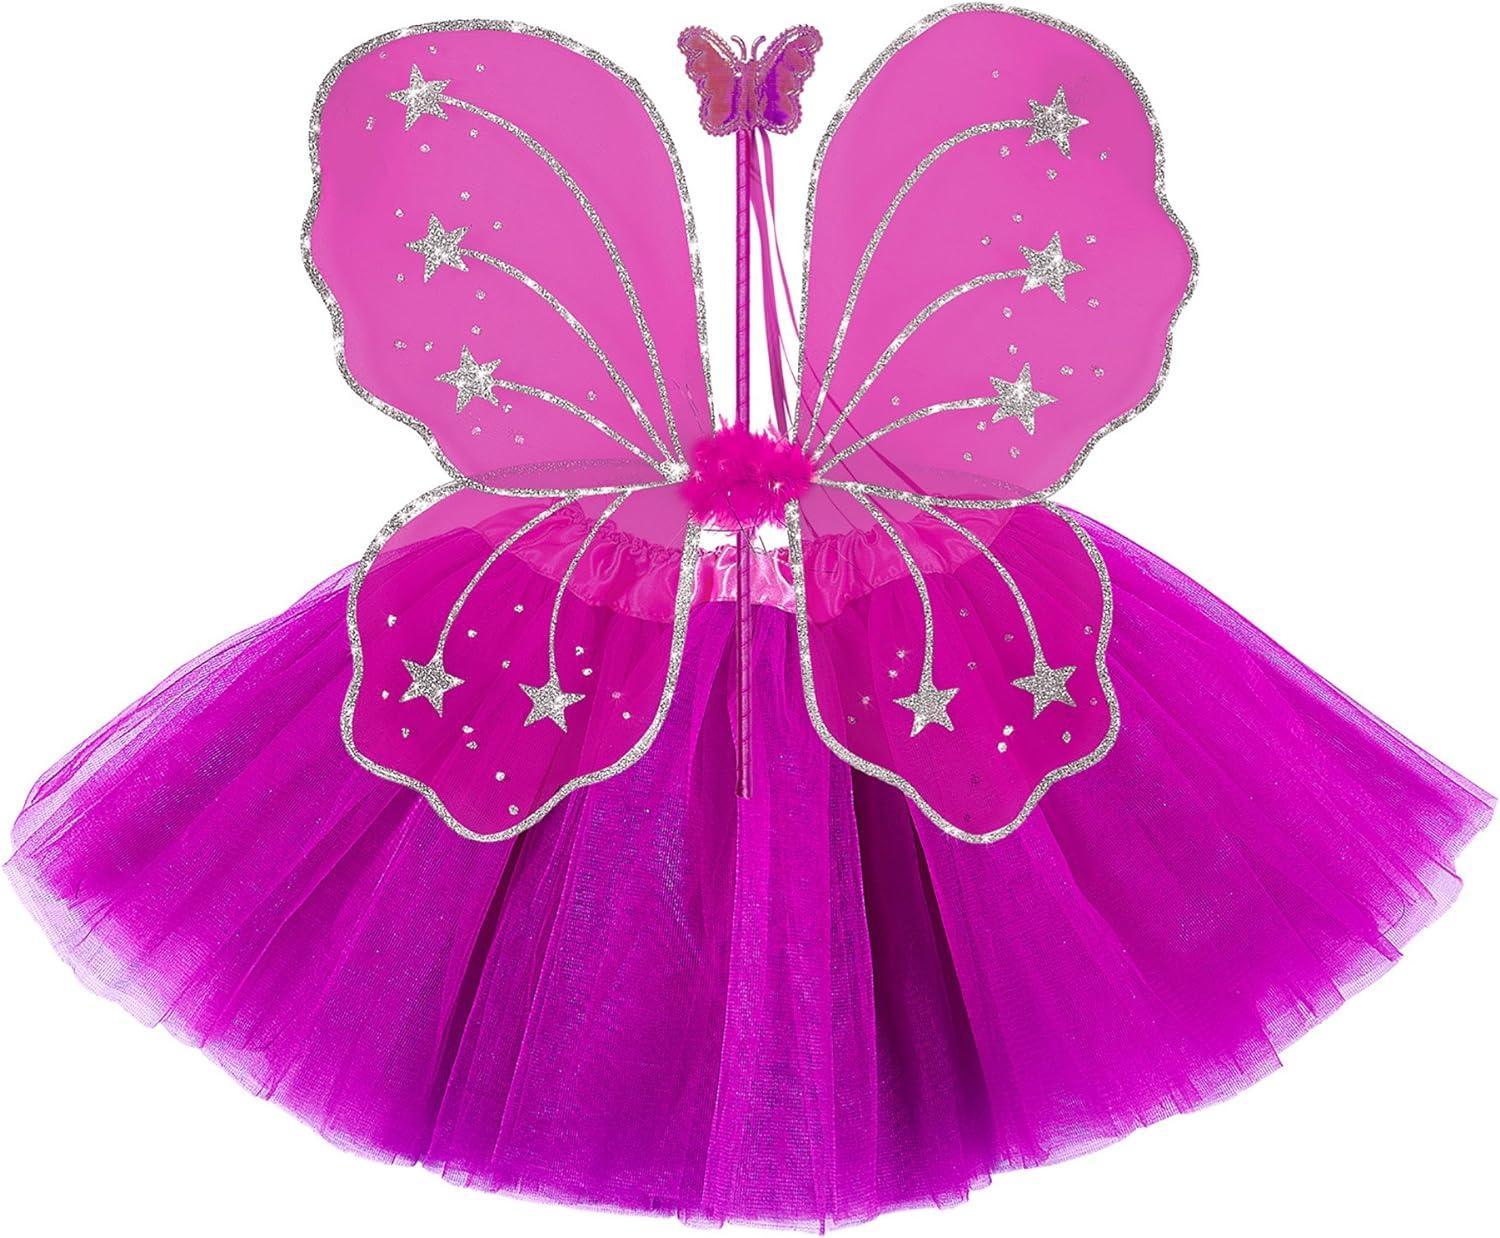 widmann costume magica fatina rosa